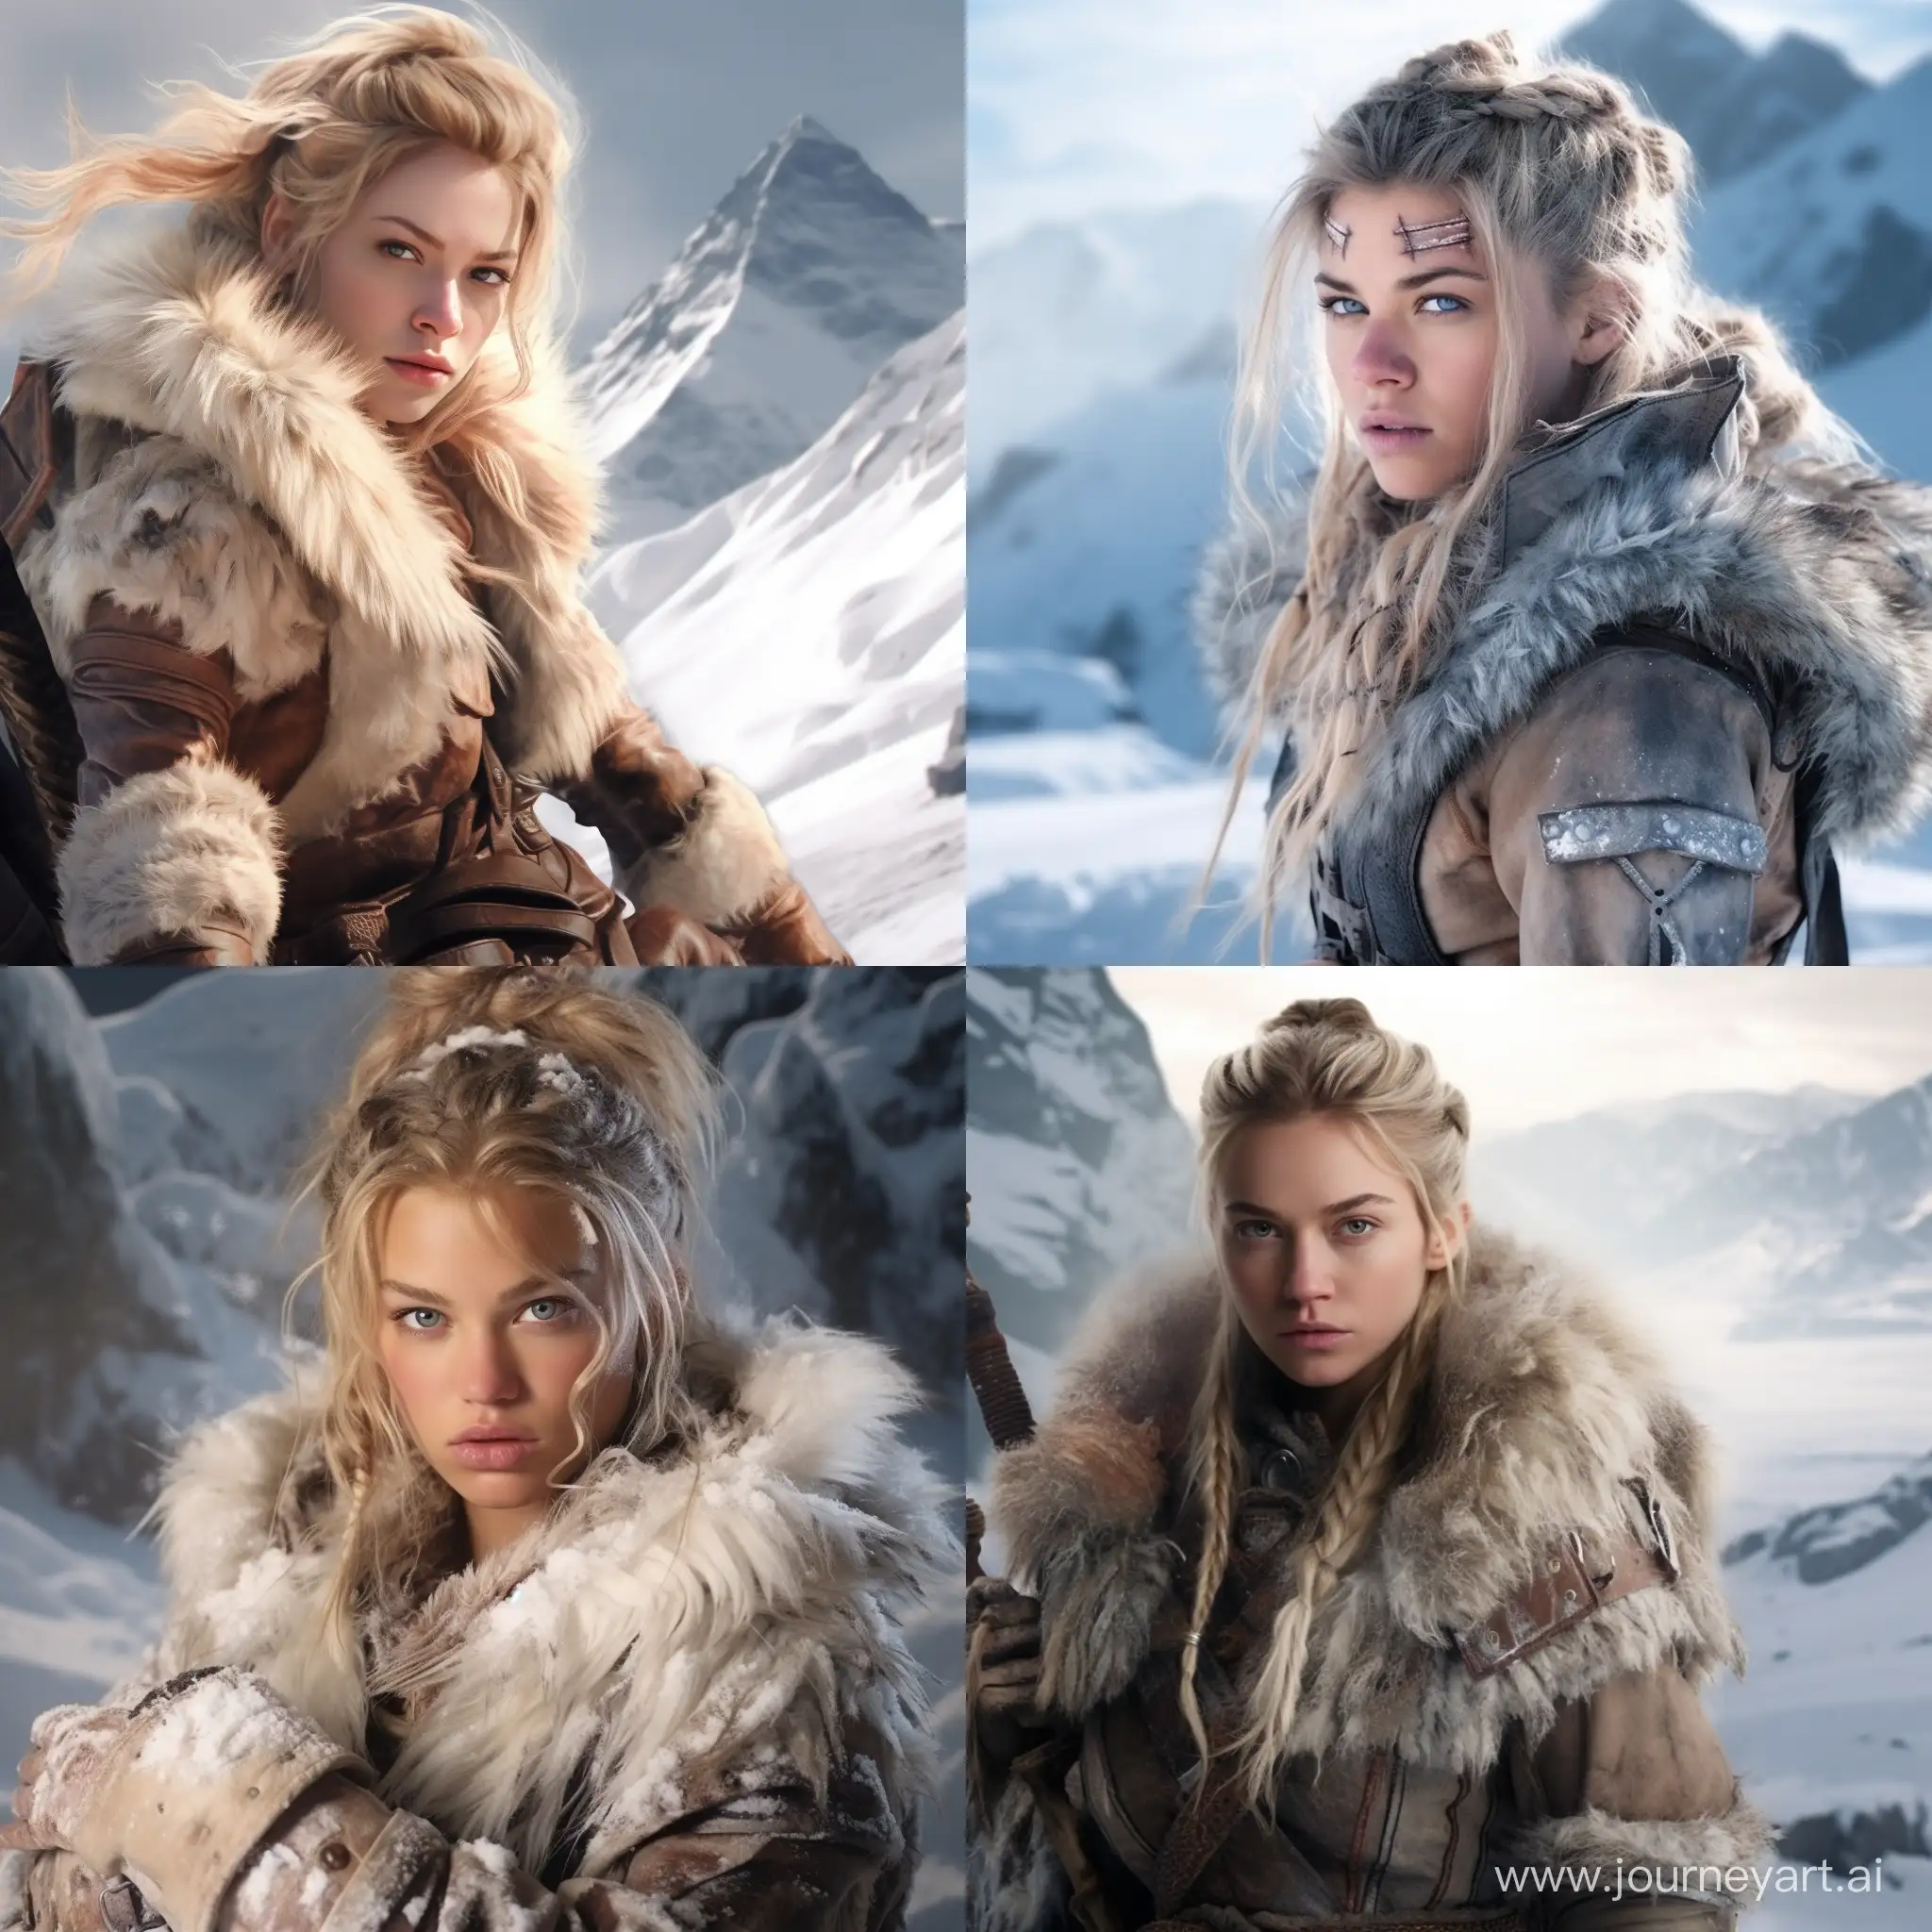 Fierce-Blonde-Girl-in-Fur-Clothes-Wielding-a-Hammer-in-Snowy-Mountains